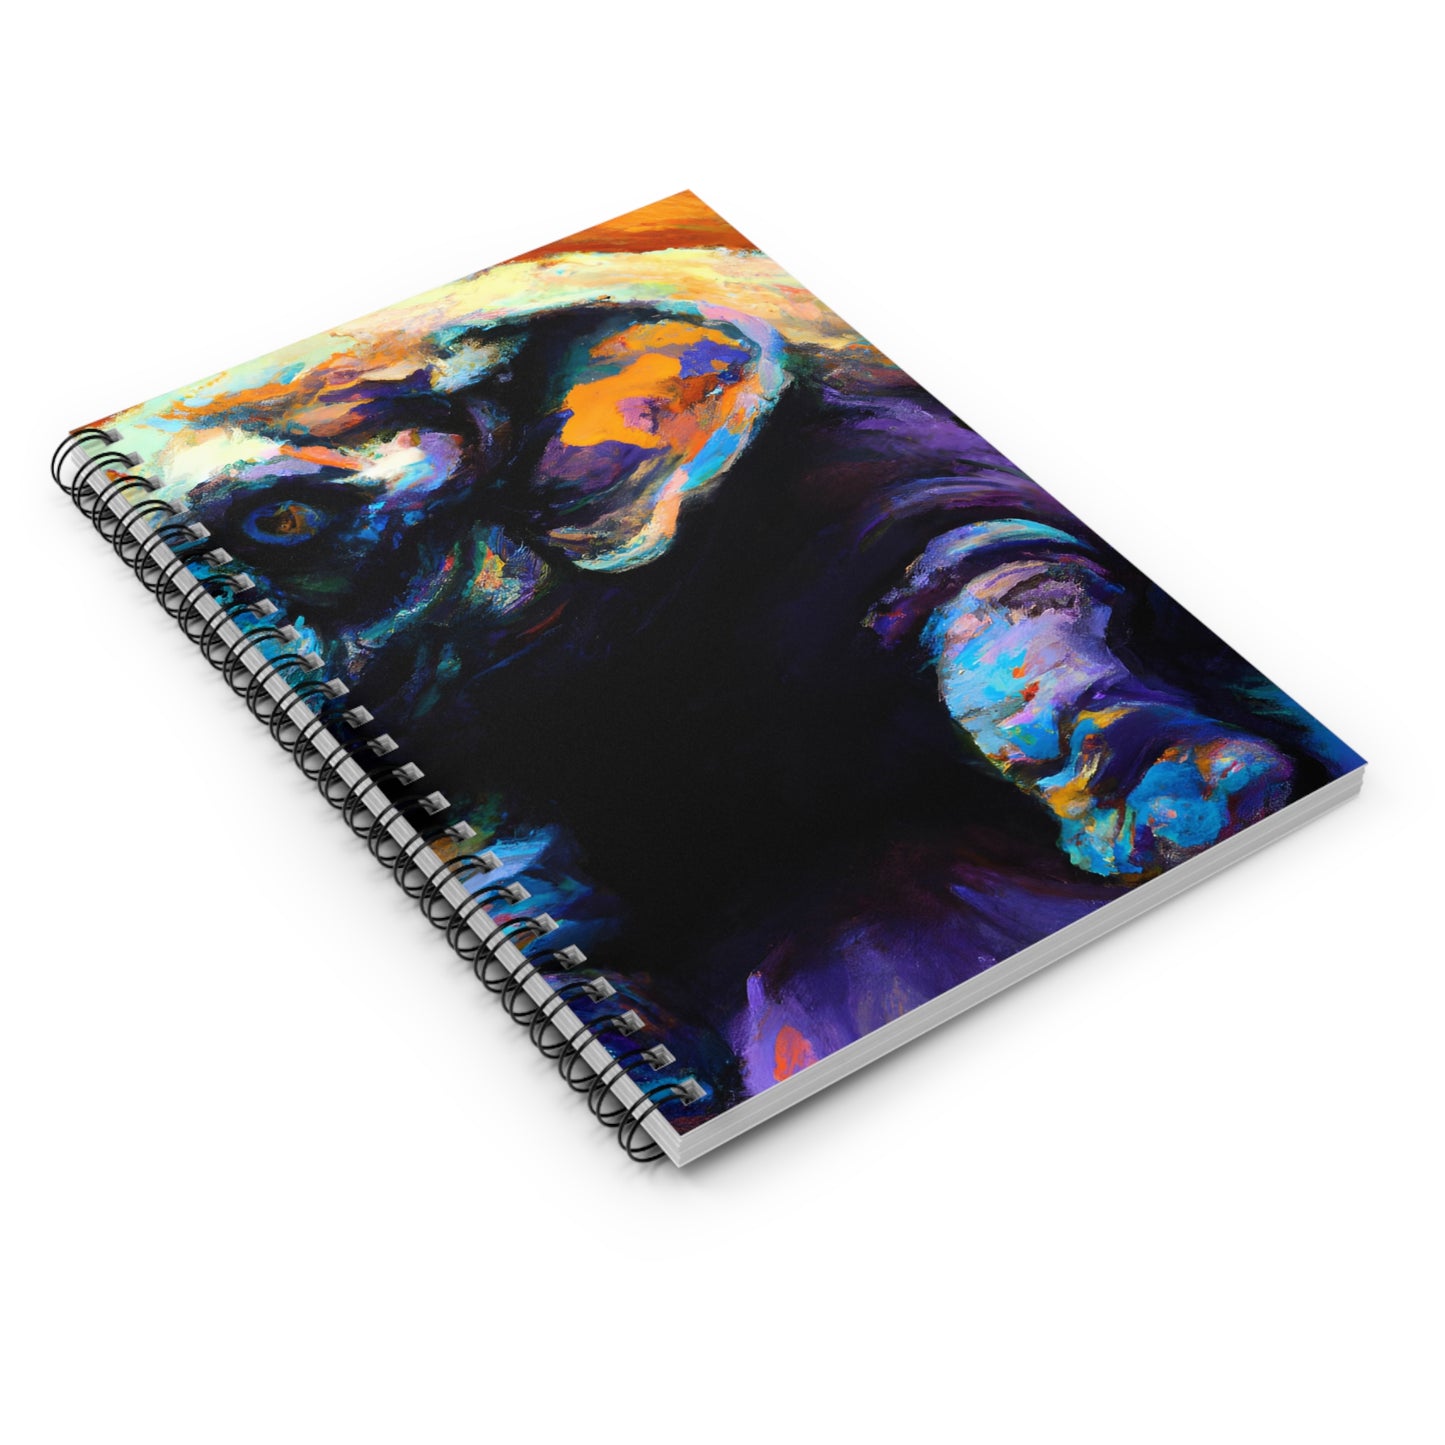 Petrucci Palette Notebook Journal